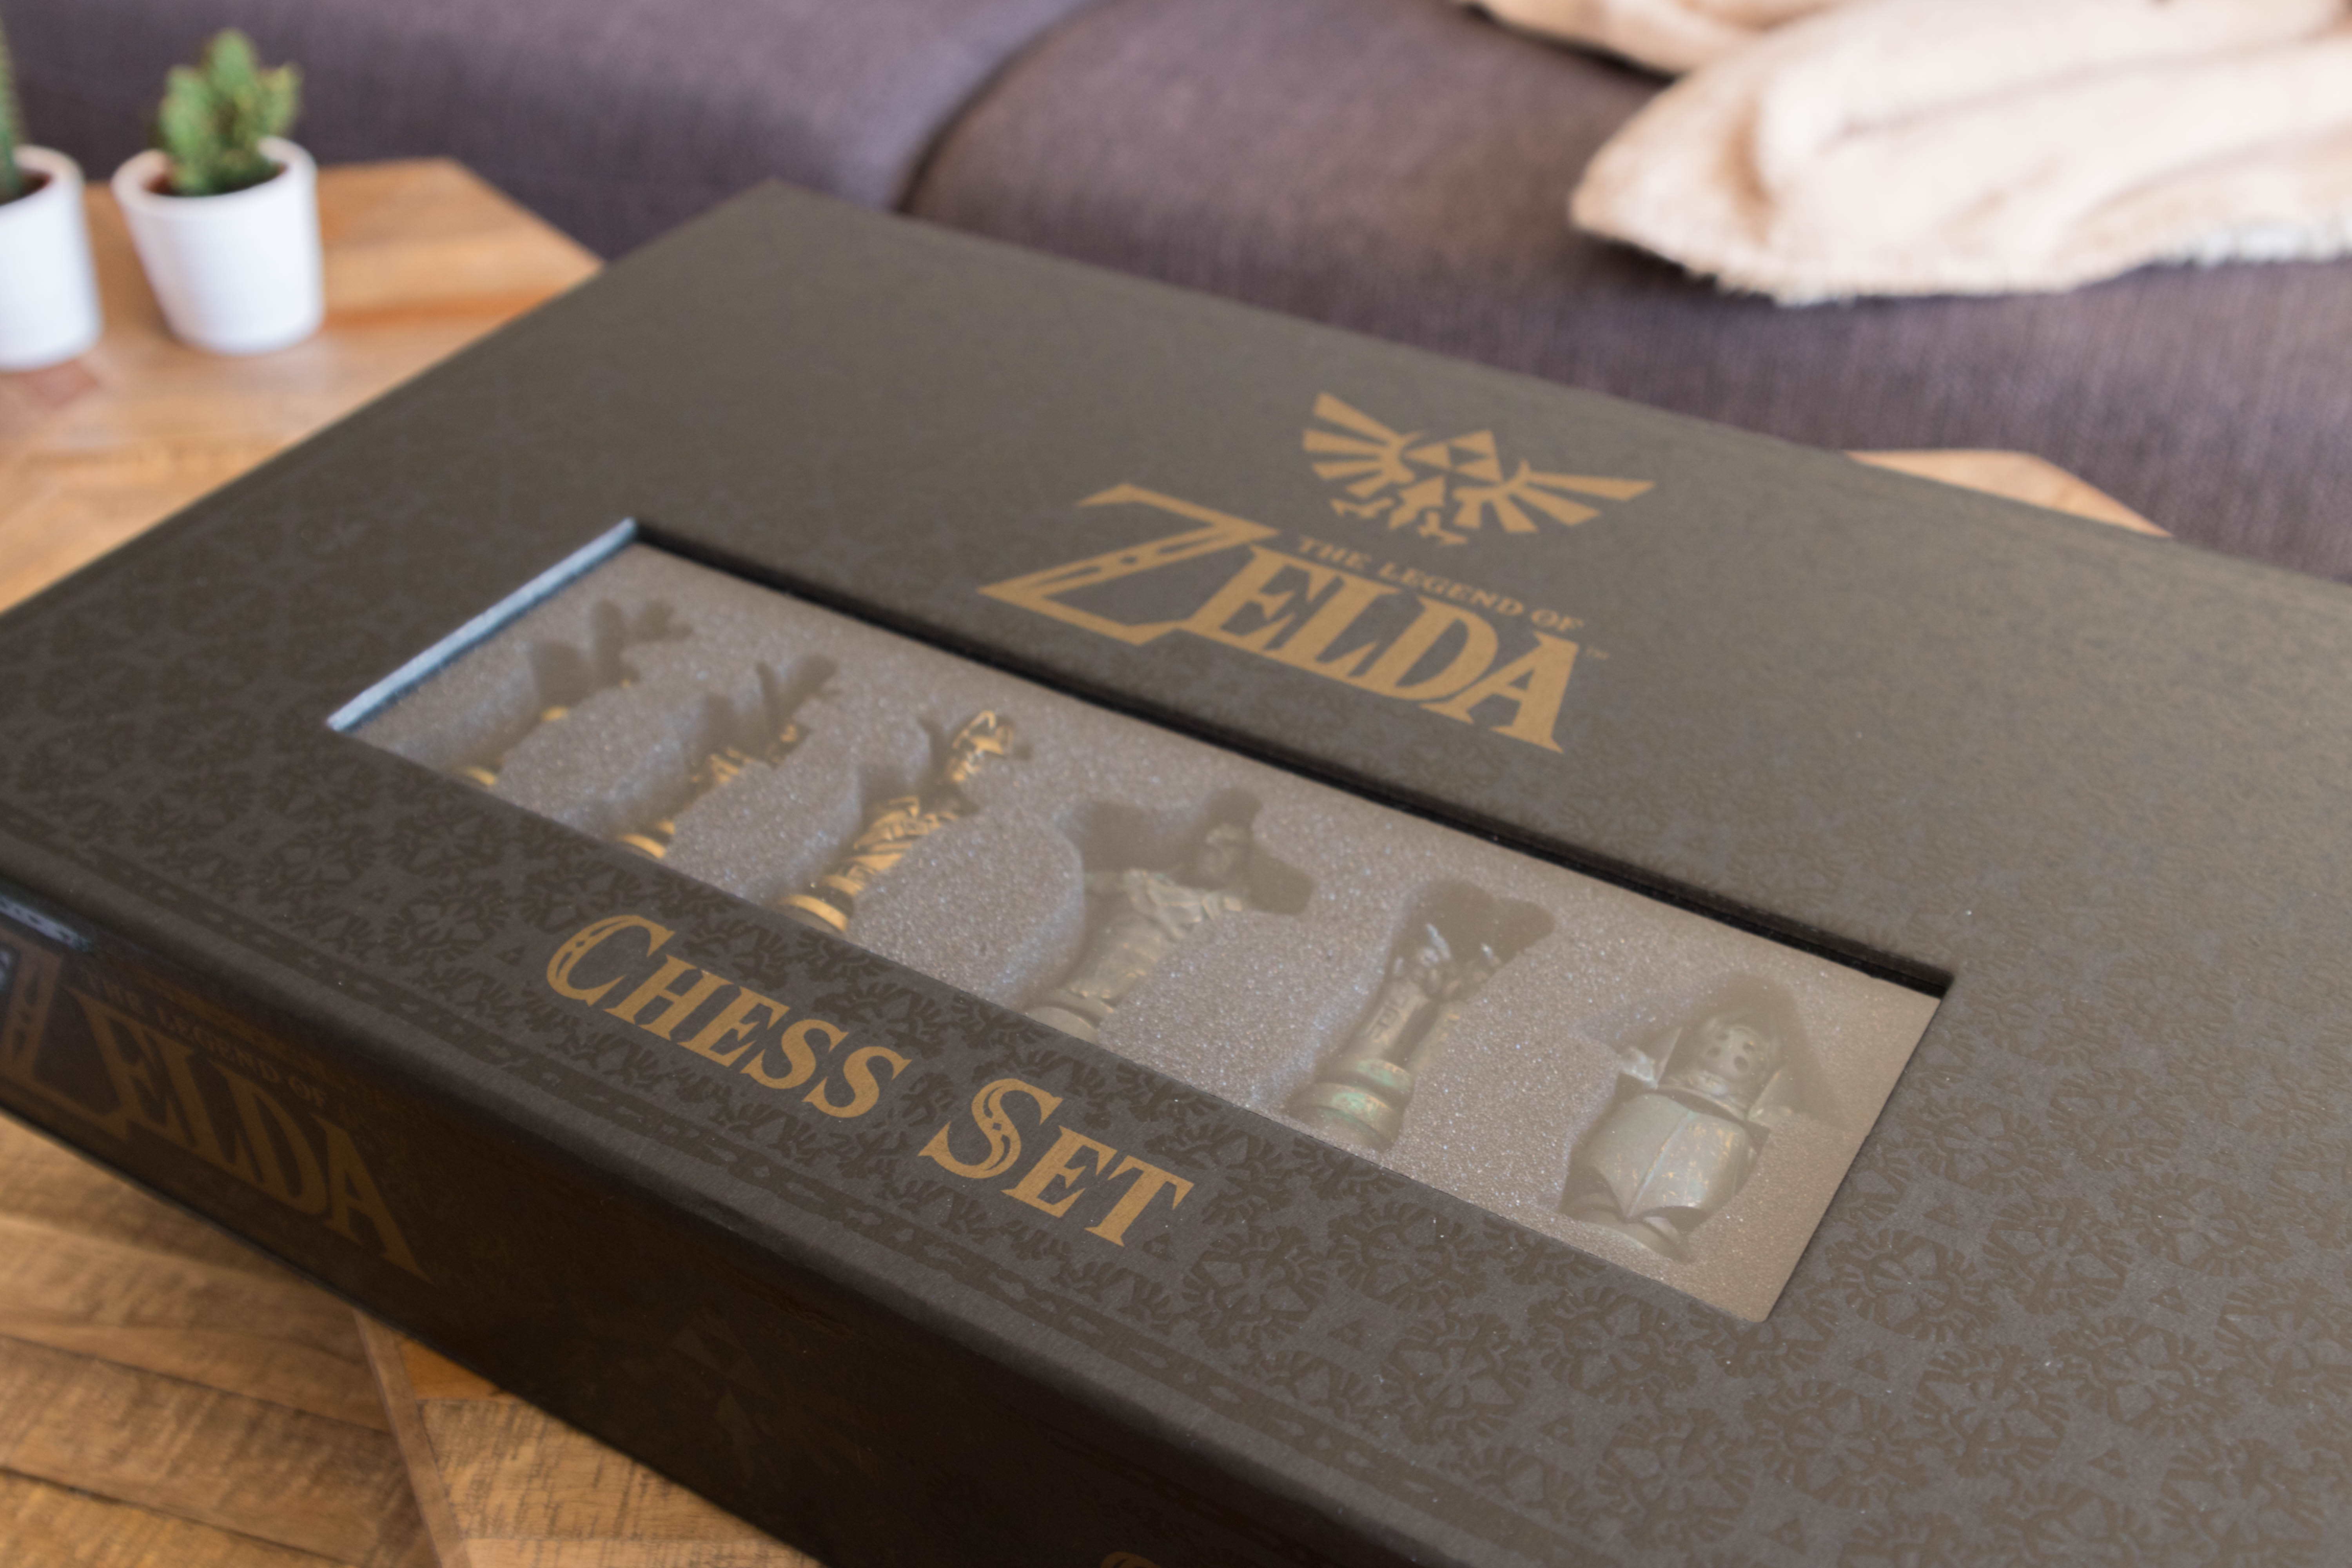 Chess Set The Legend of Zelda Fille Geek